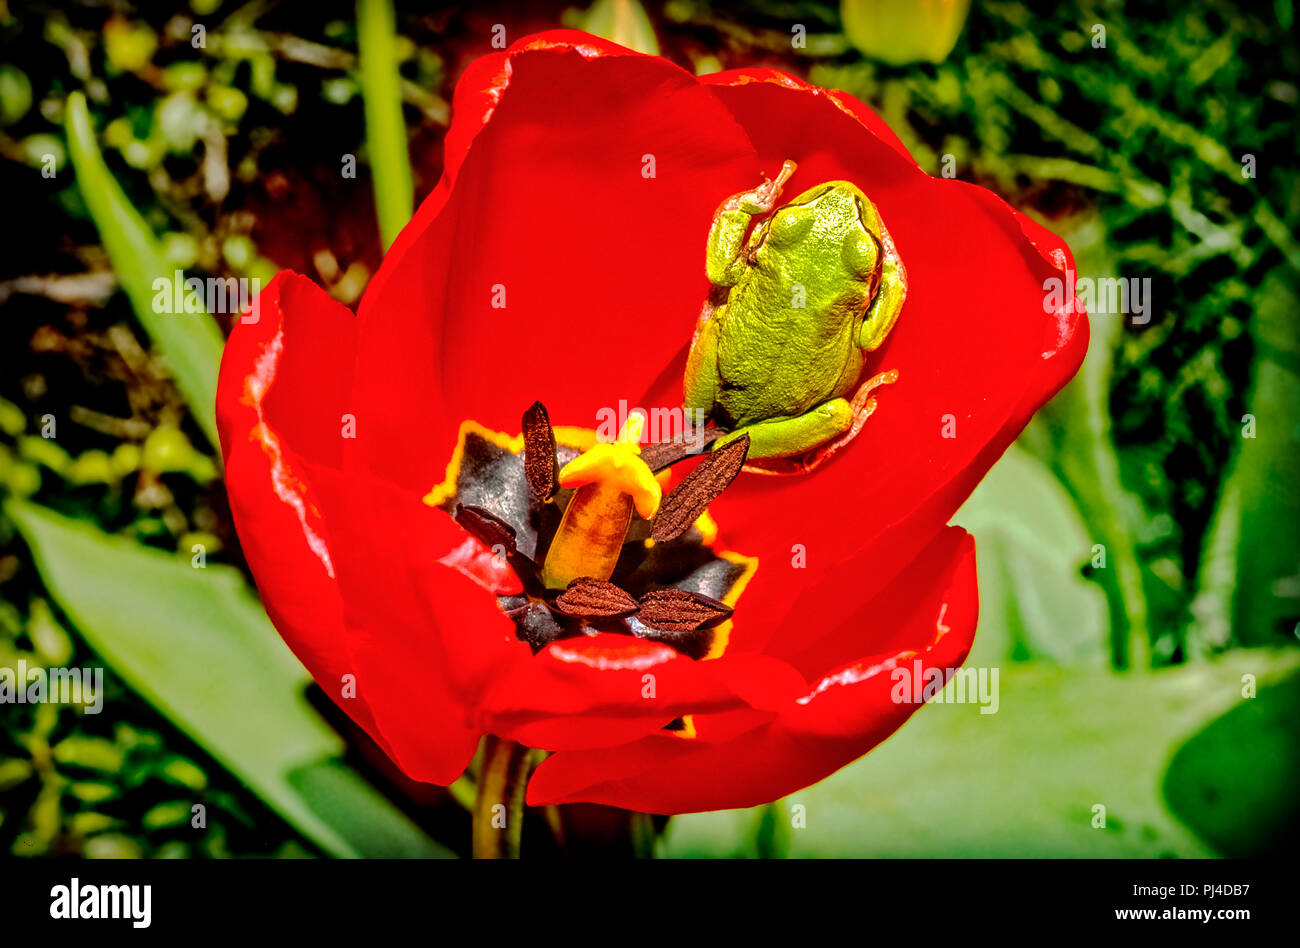 Hyla Arborea - green tree frog on red tulip Stock Photo